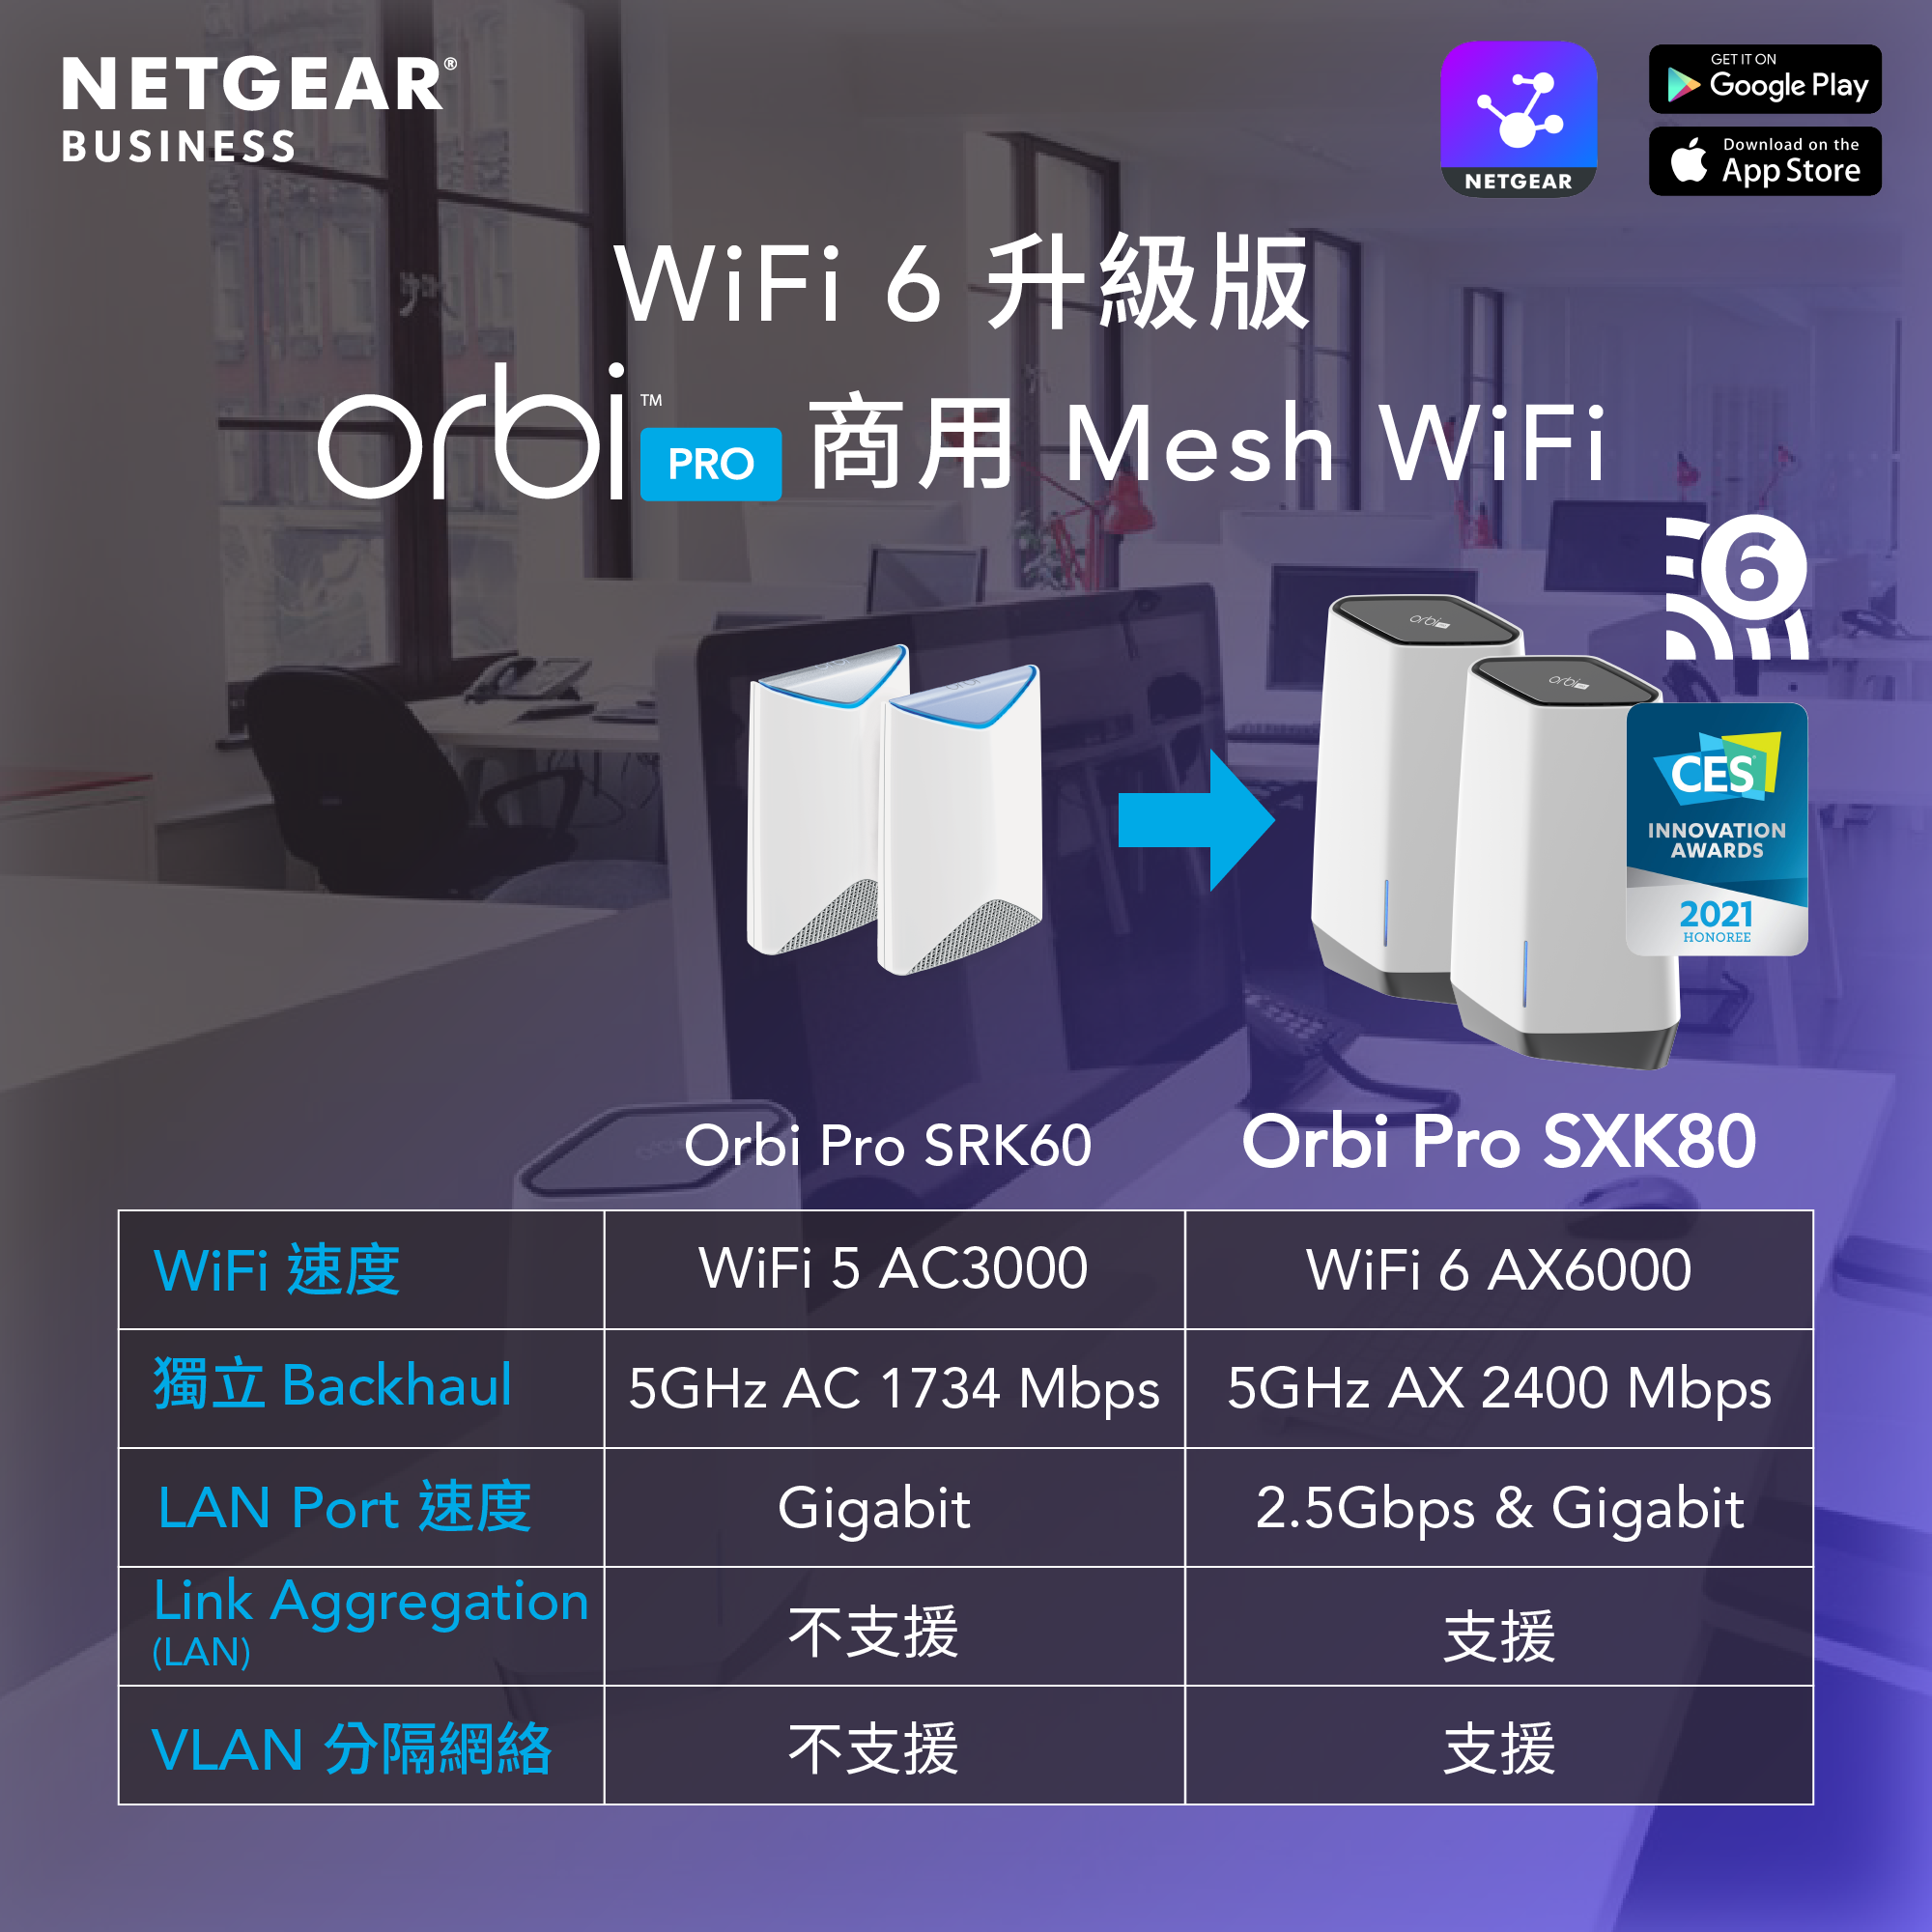 <b>Orbi Pro SXK80 (WiFi 6 新版) VS Orbi Pro SRK60 (舊版) 有何分別？</b>